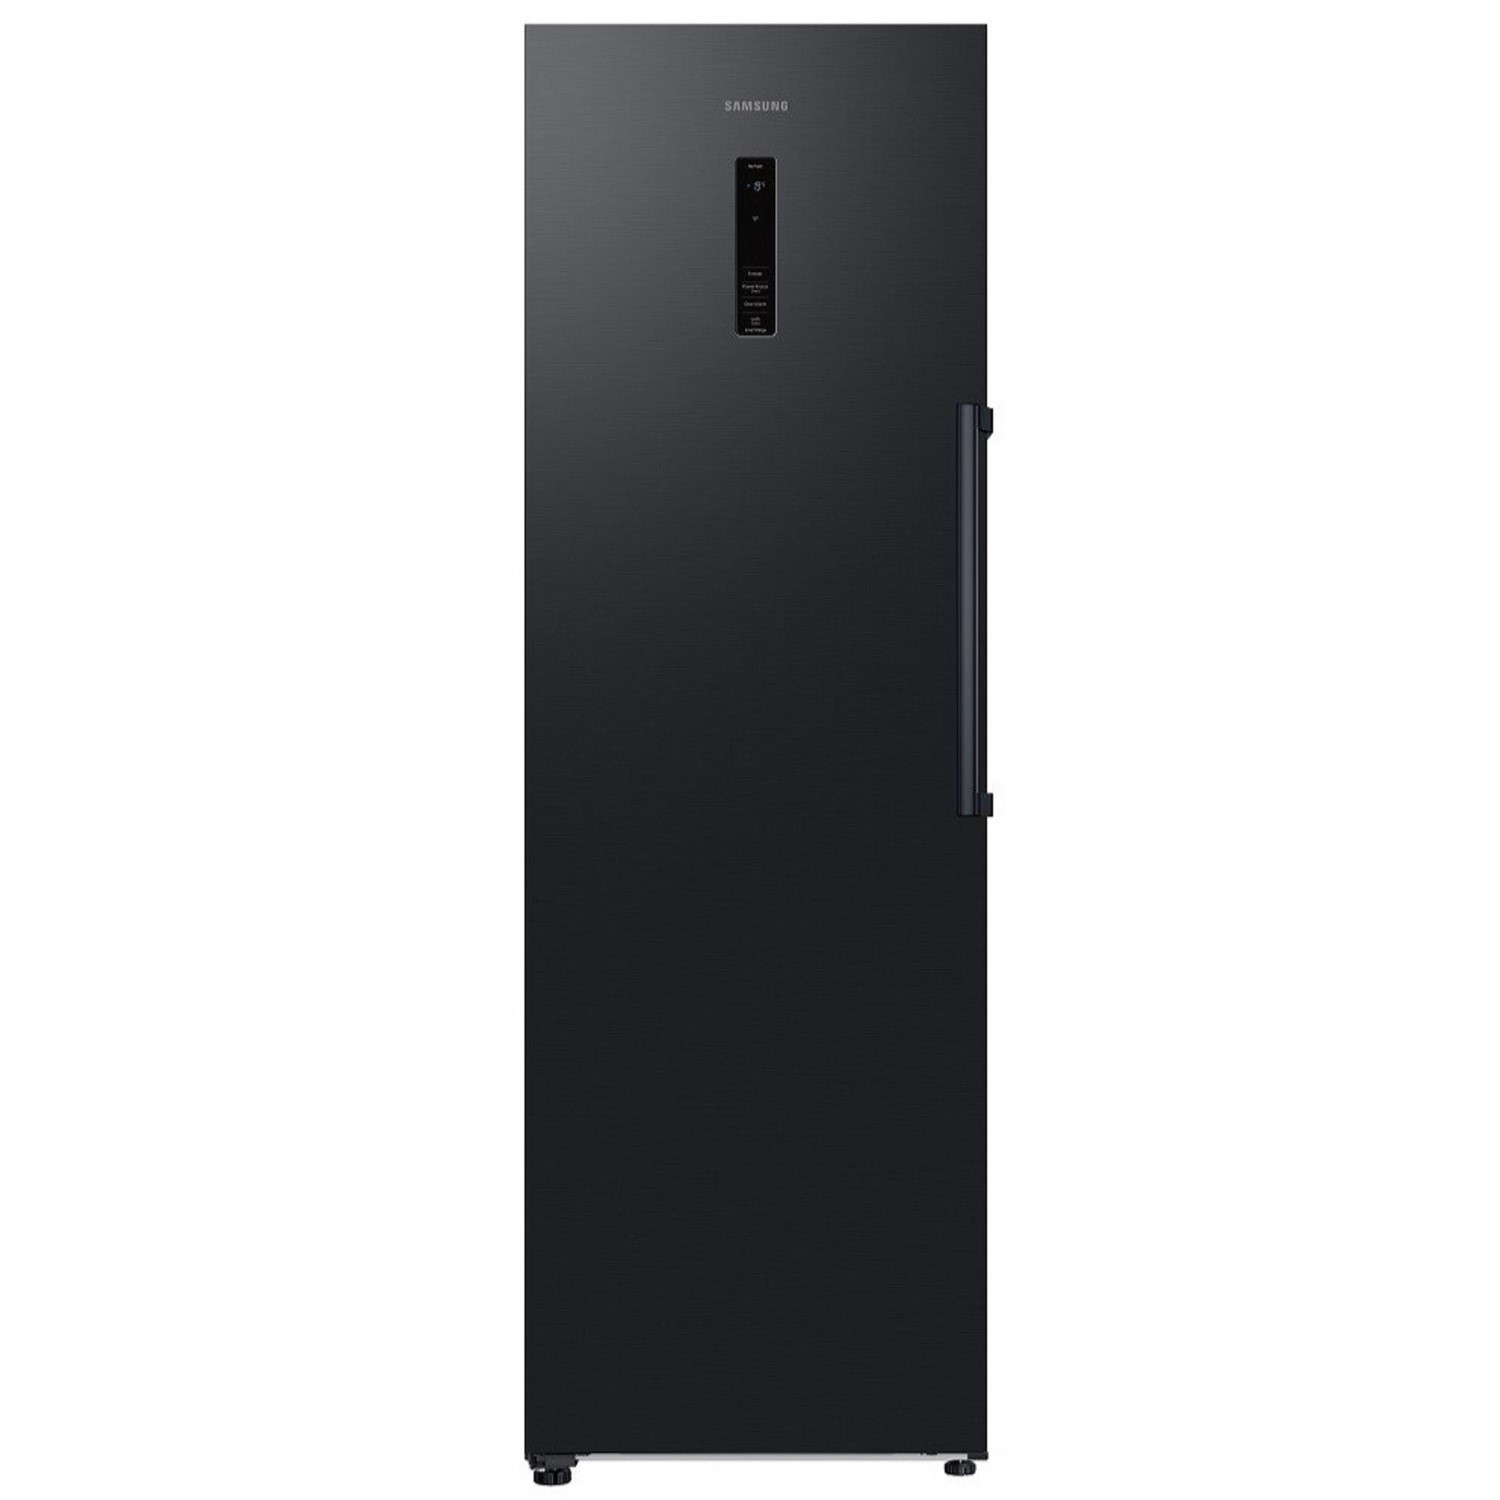 Photos - Freezer Samsung 323 Litre Tall Freestanding  - Black RZ32C7BDEBN 